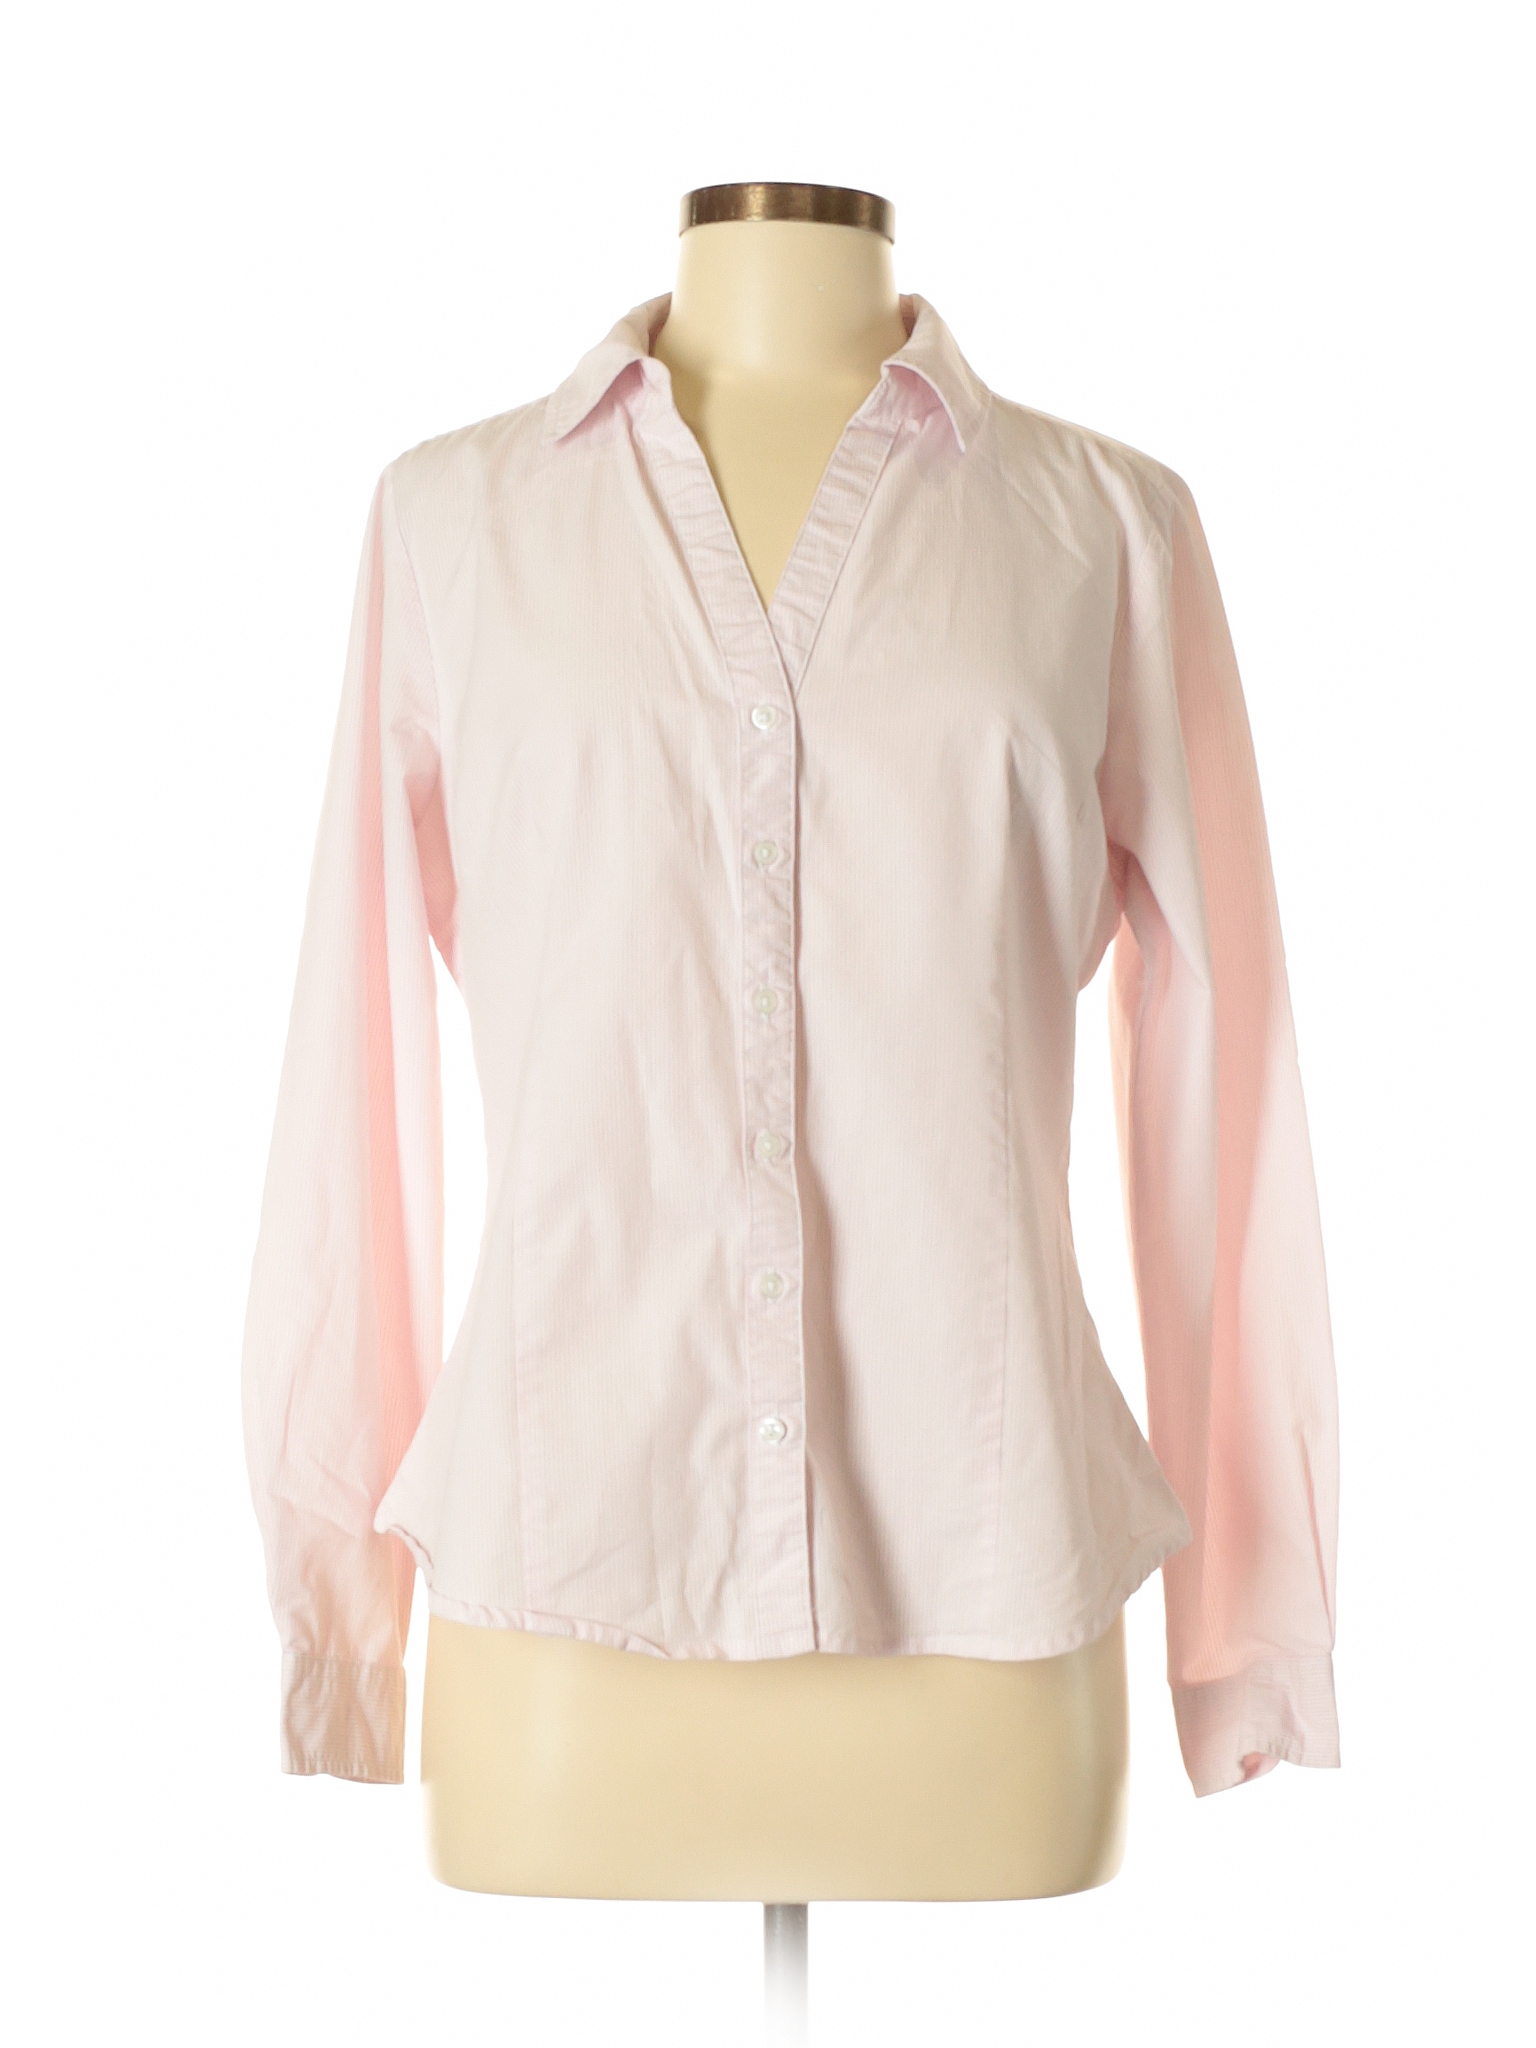 Harve Benard Solid Pink Long Sleeve Button-Down Shirt Size L - 88% off ...